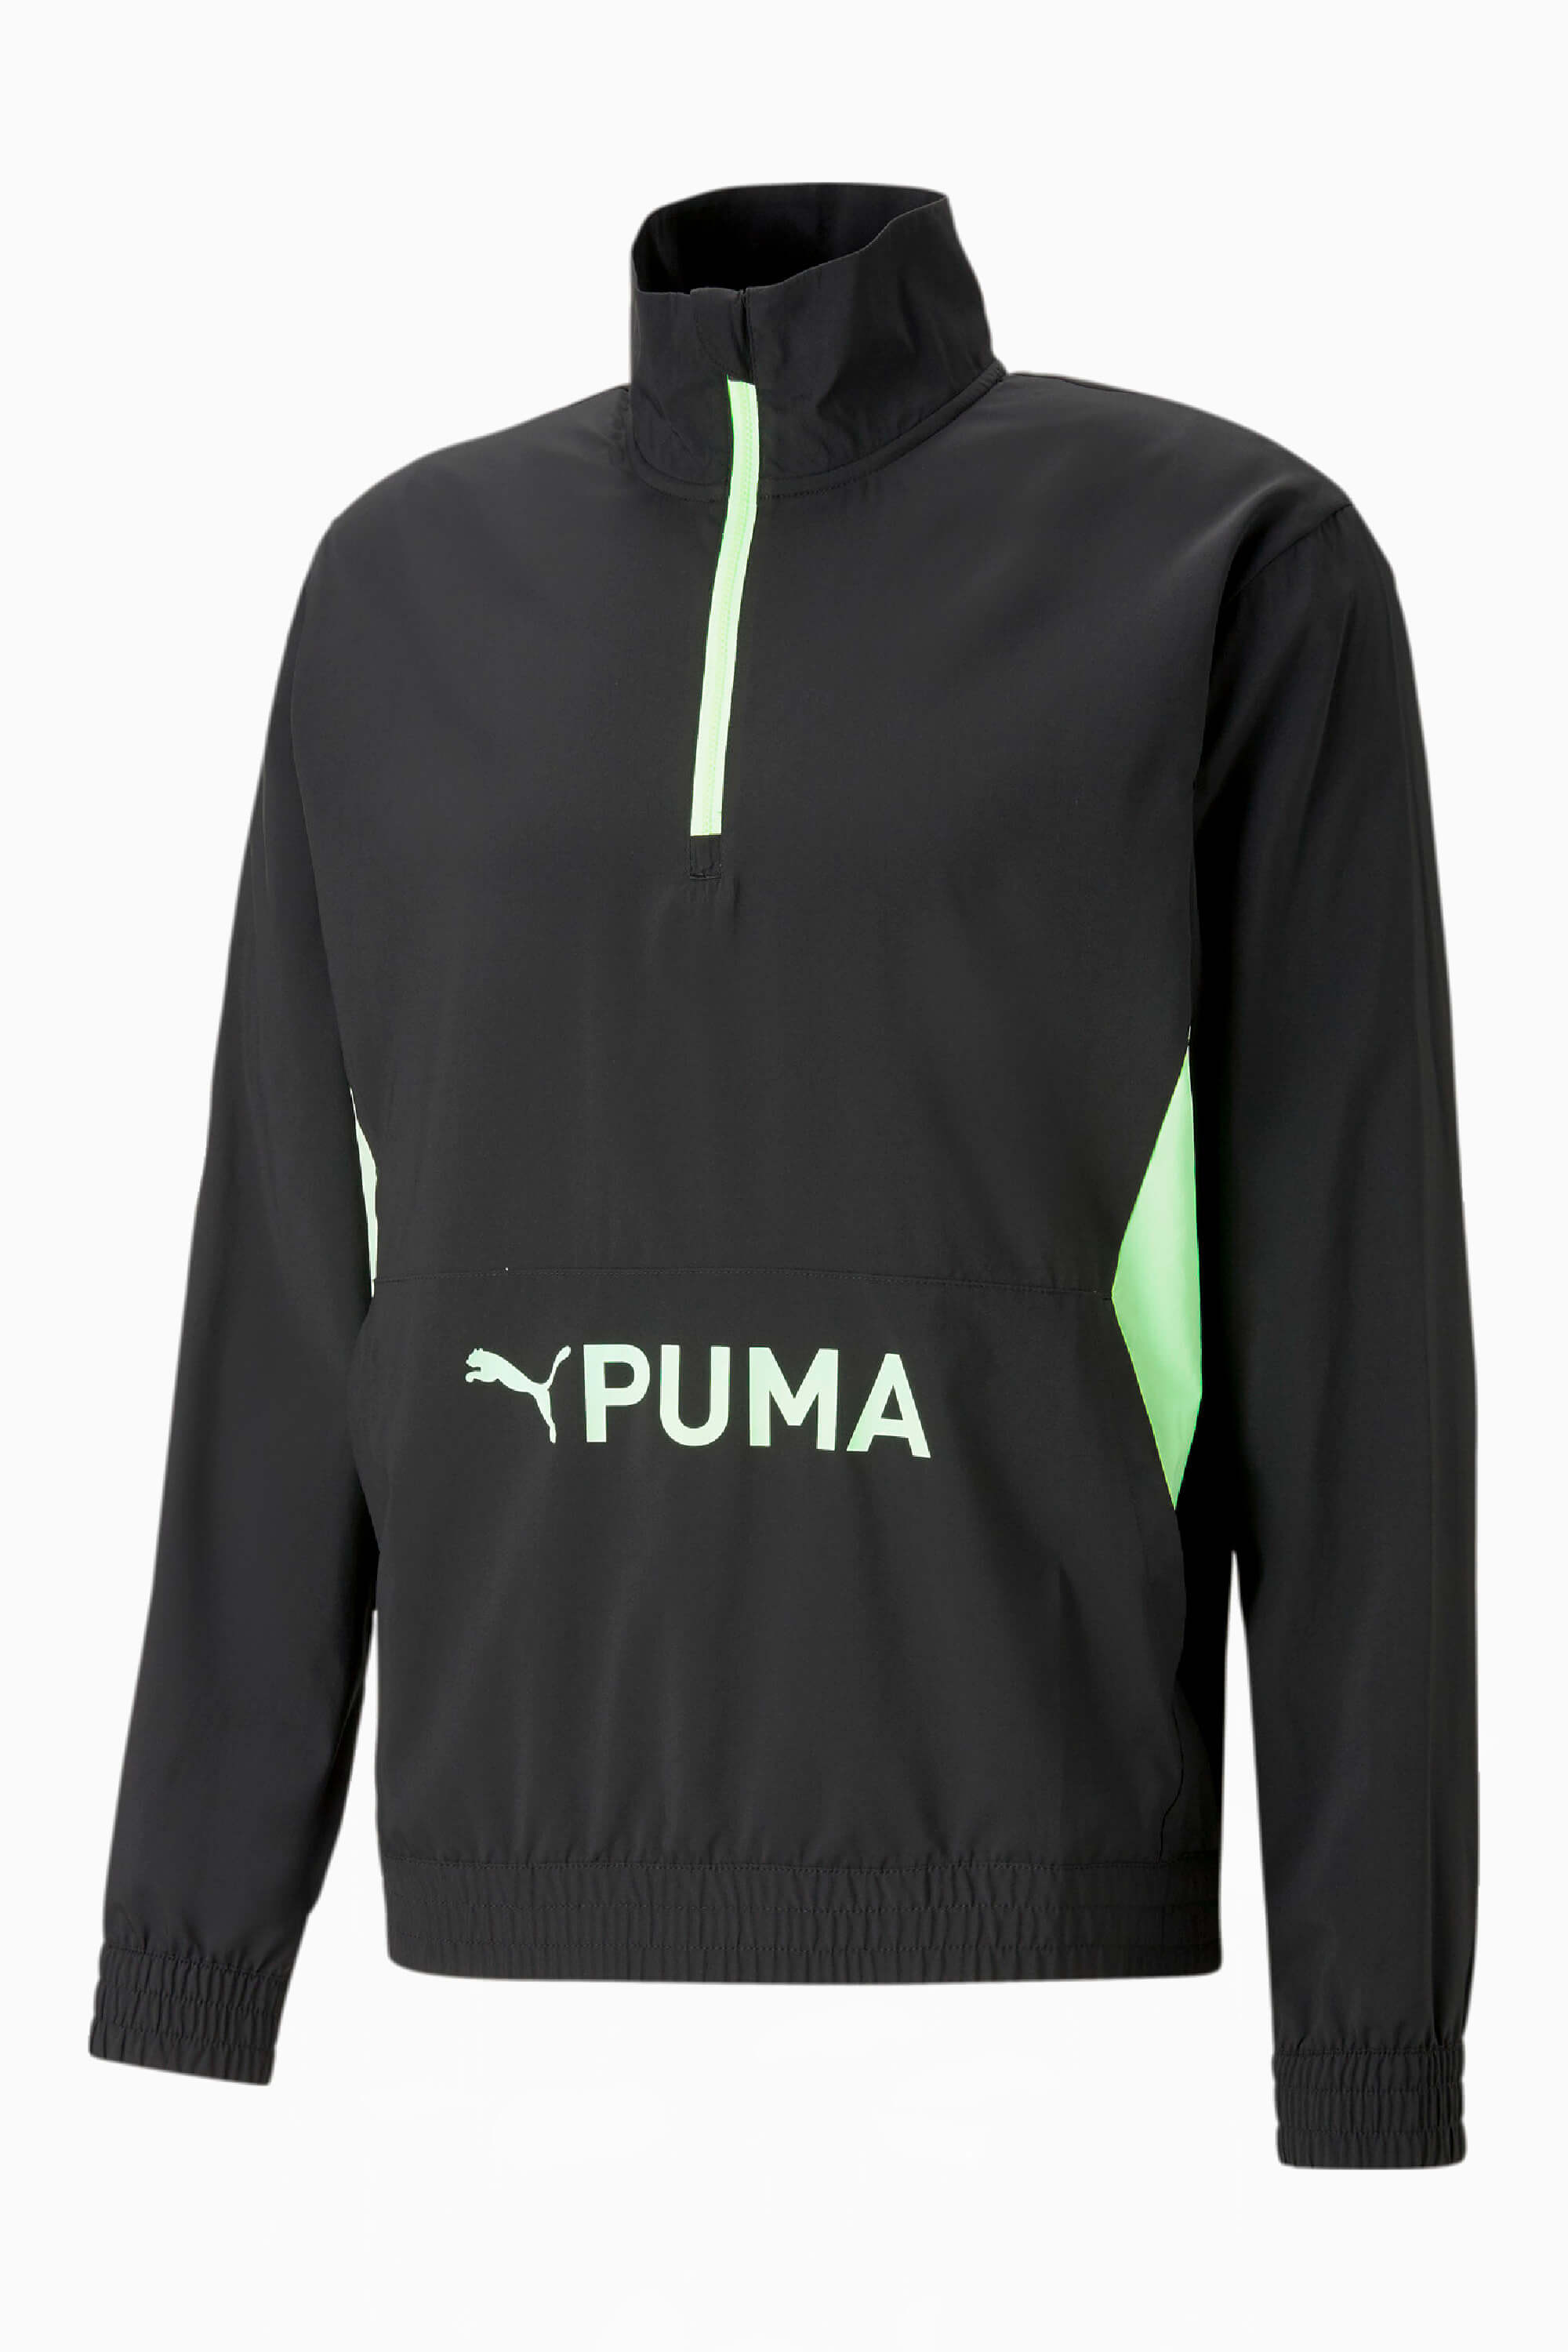 Puma Dry Cell Sport Lifestyle Full Zip Track Jacket Men's Size Medium  Orange | eBay